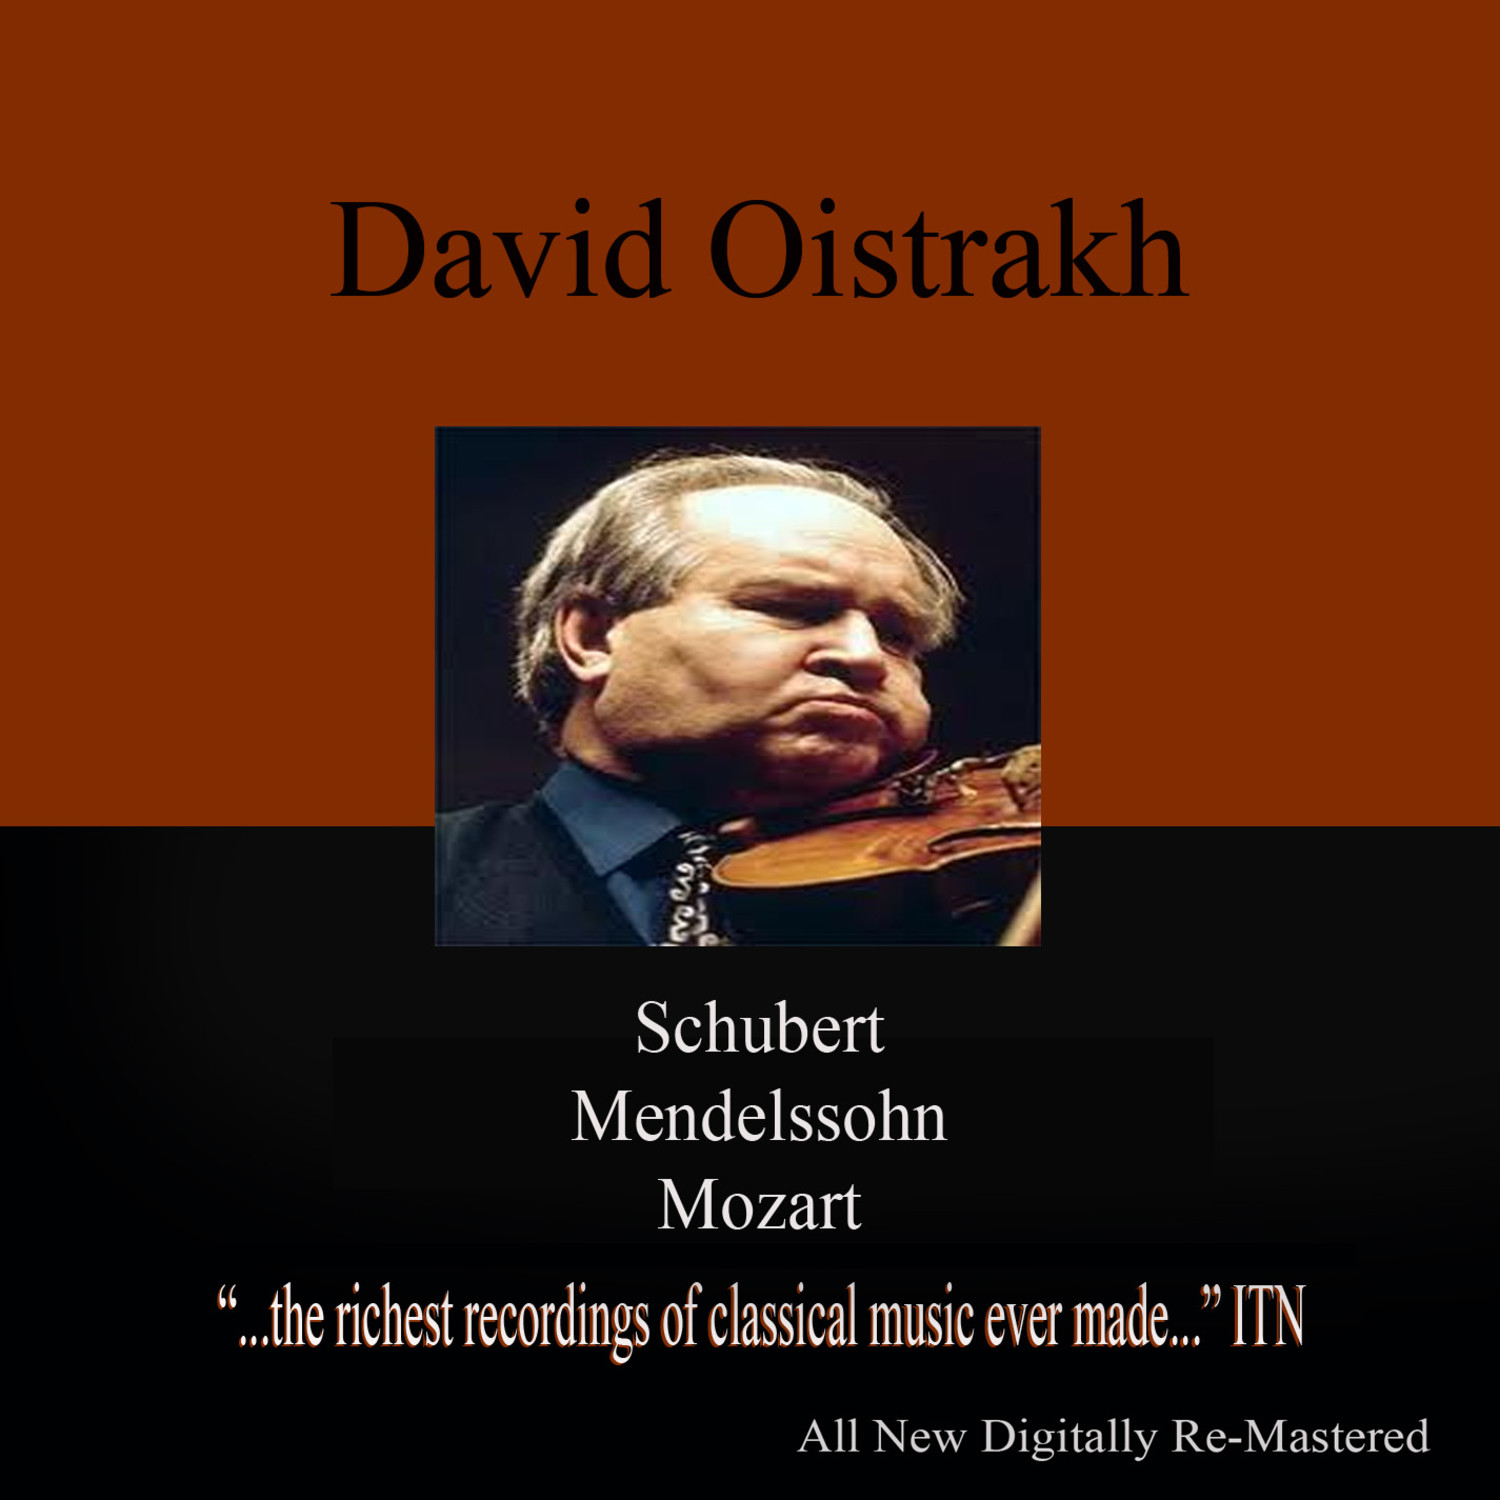 Concerto in E minor for Violin and Orchestra, Op. 64,